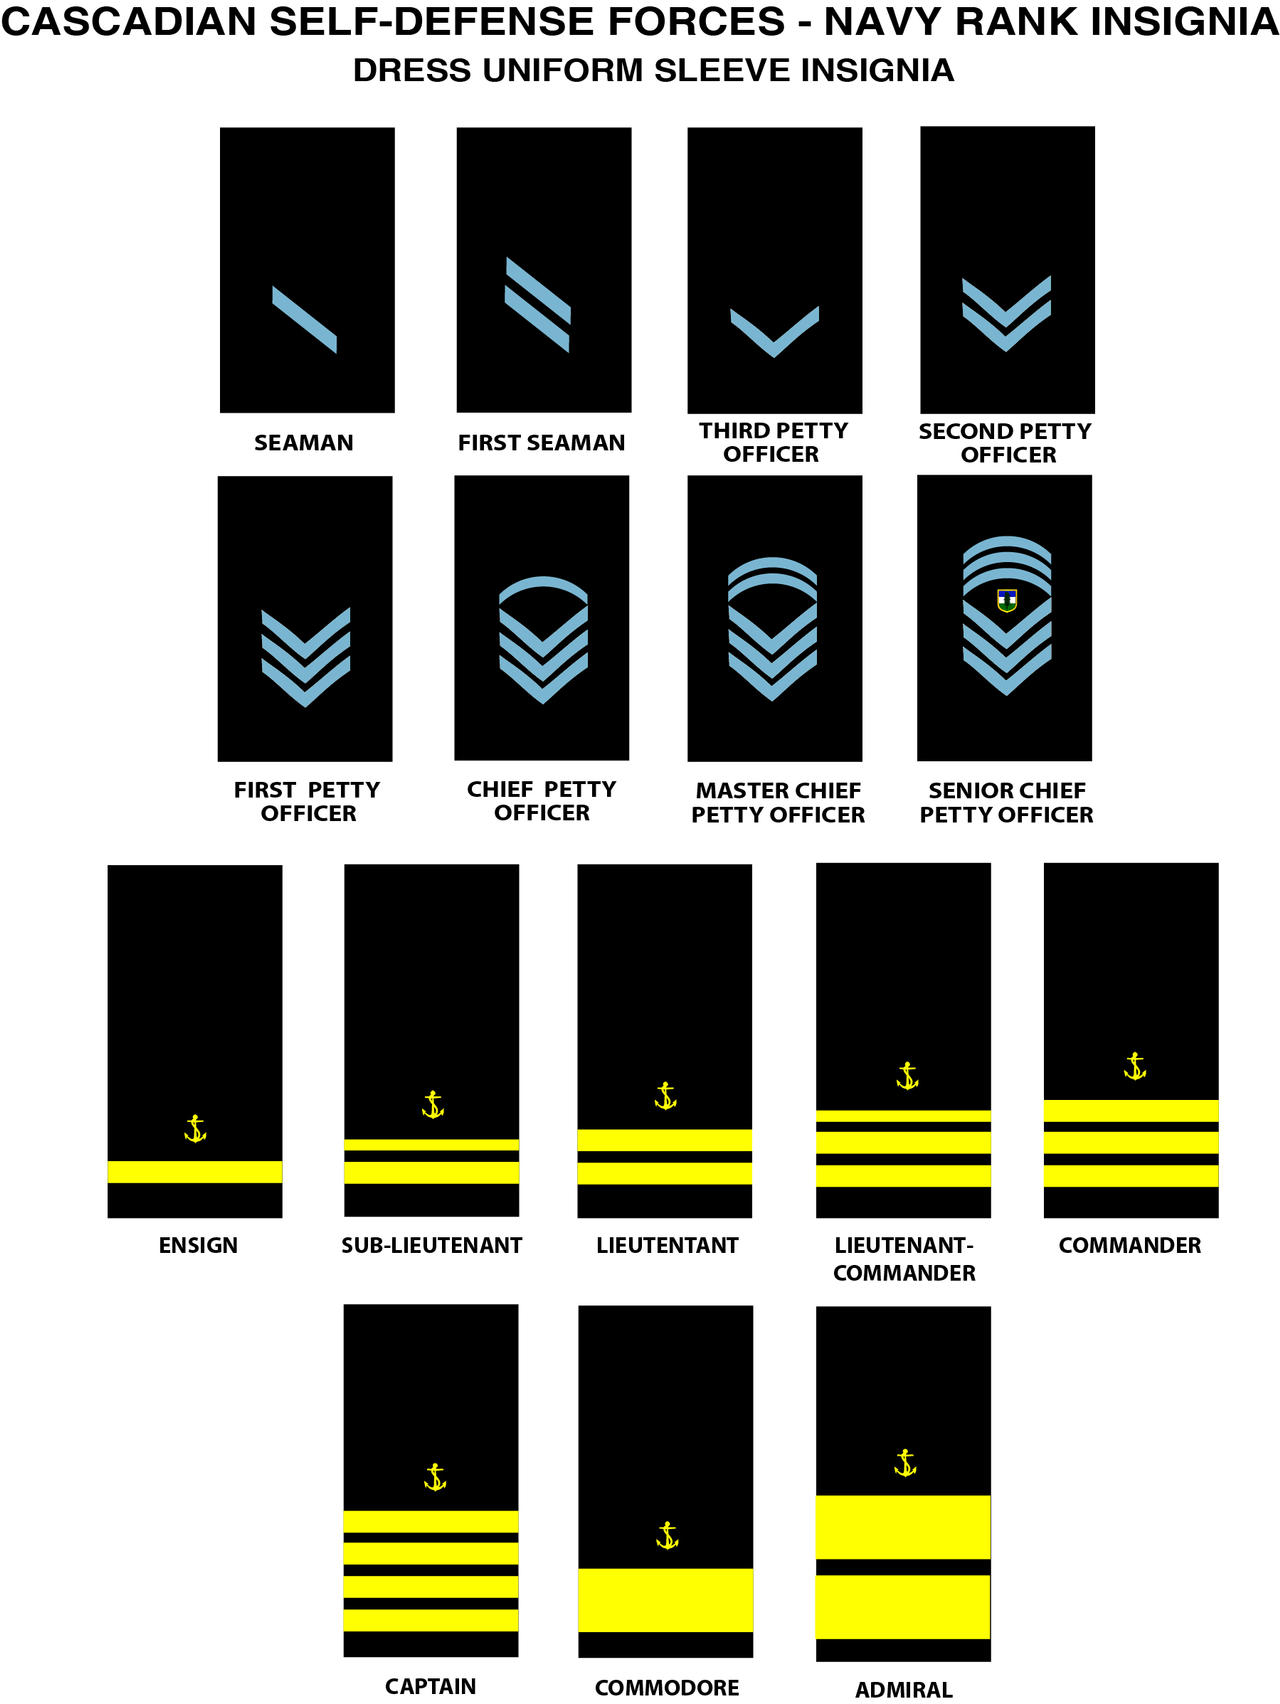 CSDF Navy Rank Insignia 2014 by shakineyeworks on DeviantArt